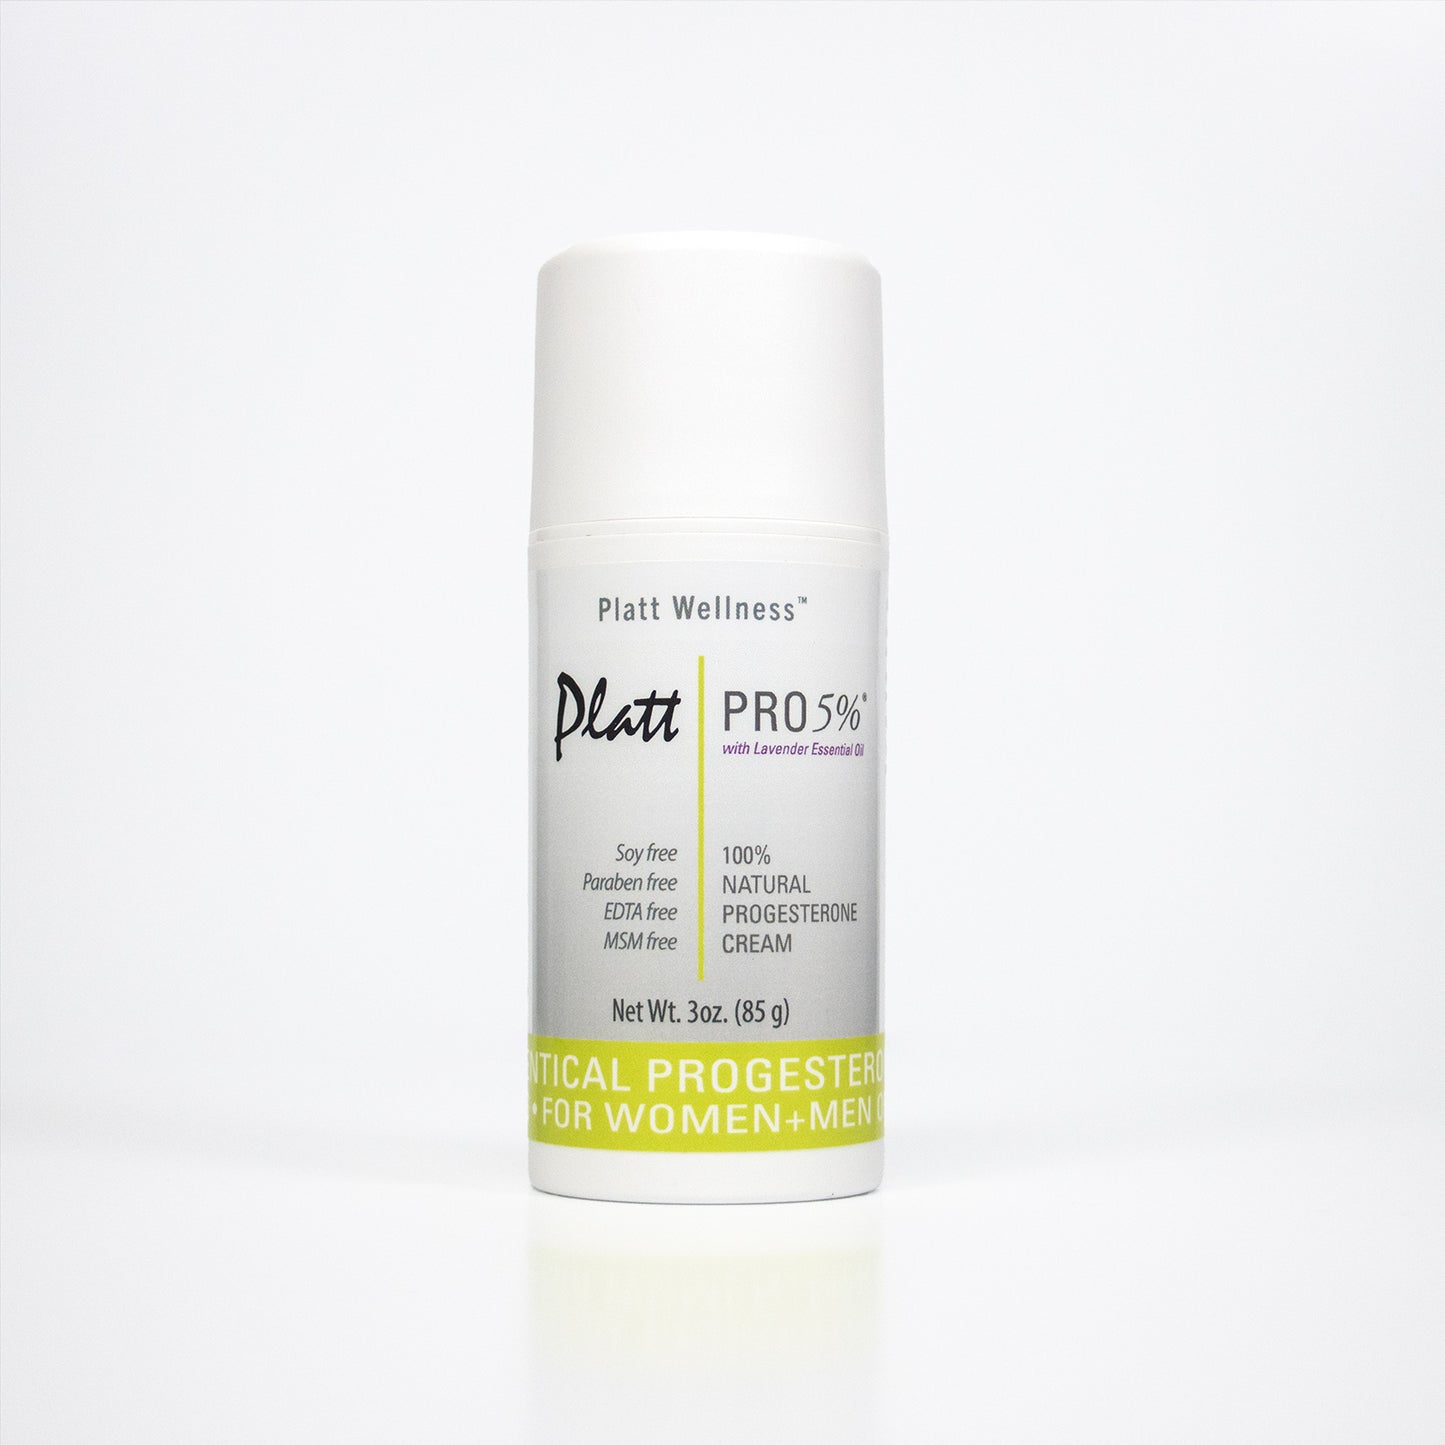 Platt PRO 5% All Natural & Bio-Identical Progesterone Cream - Platt Wellness